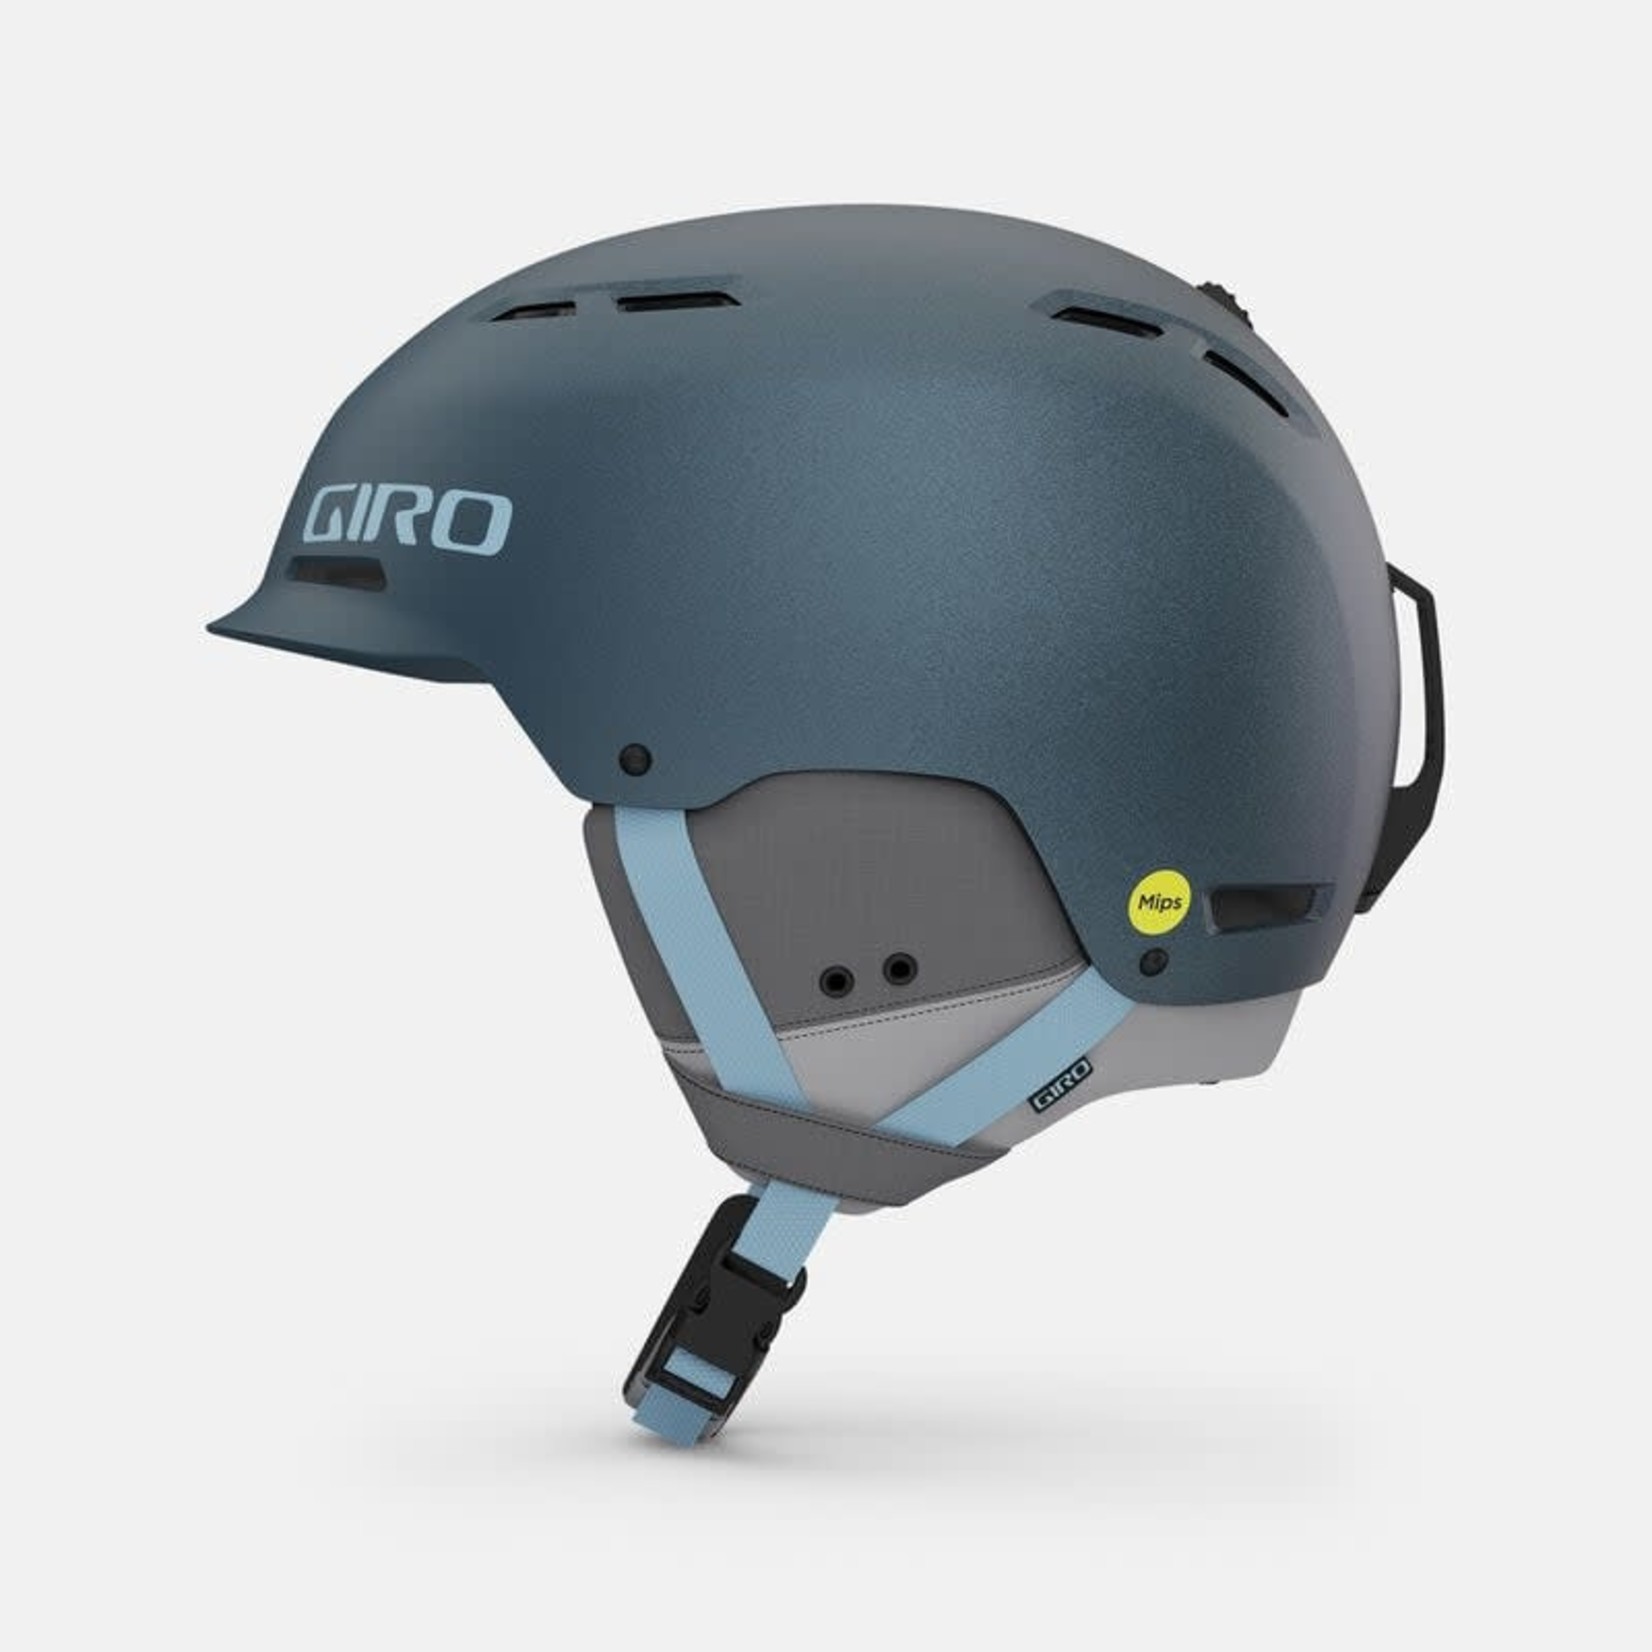 Giro NEW Giro Trig w/ MIPS Adult Snow Helmet